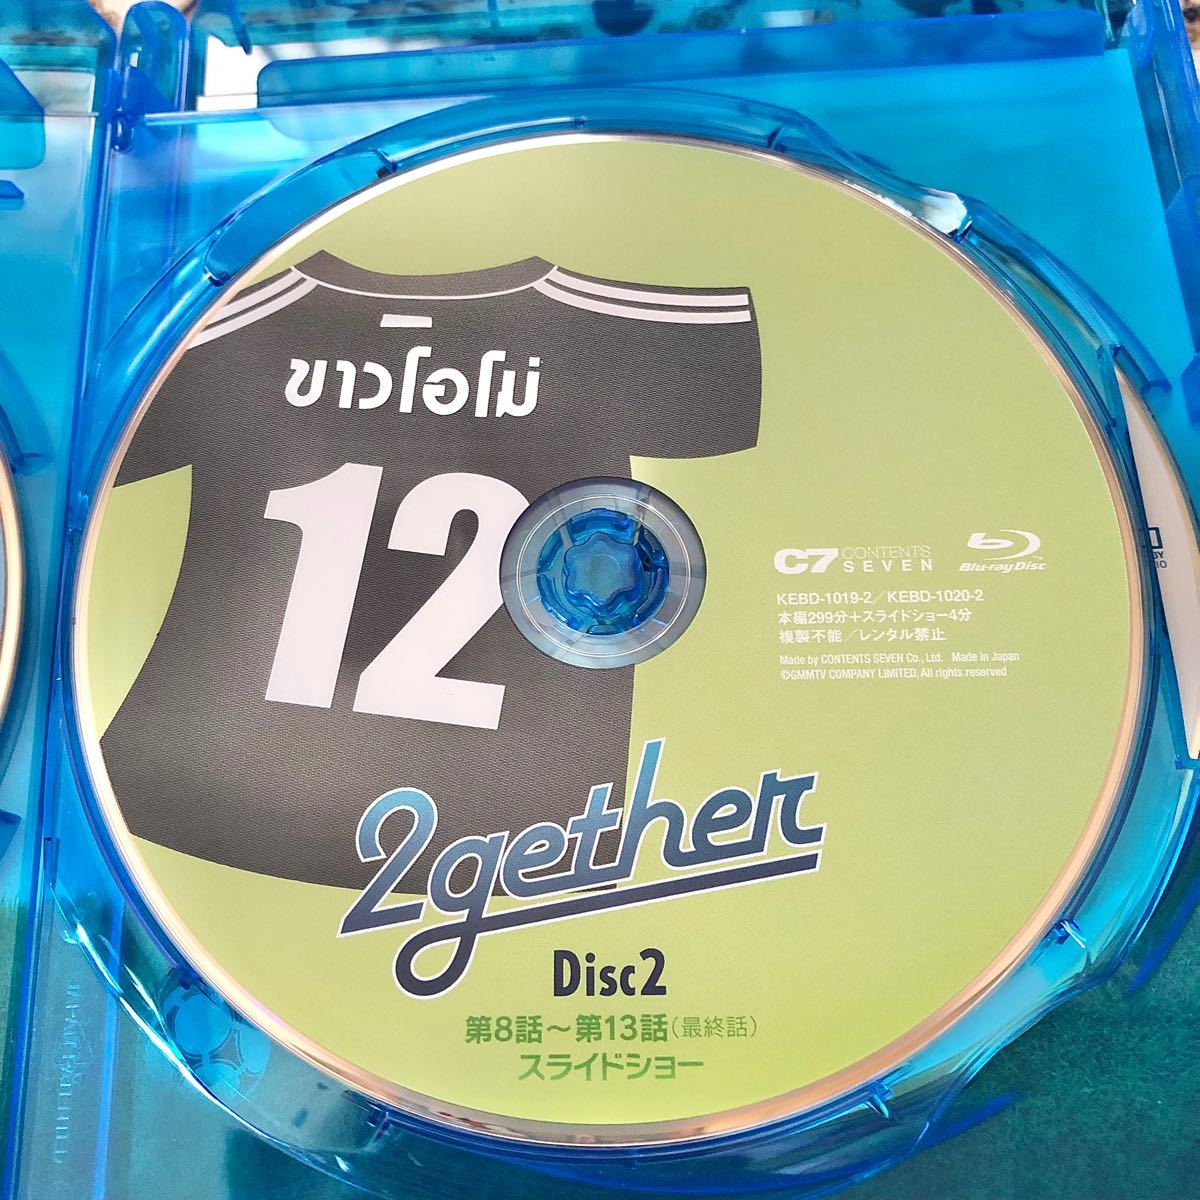 2gether Blu-ray DVD 初回生産限定盤 ブルーレイ BrightWin ブライトウィン F4 Thailand